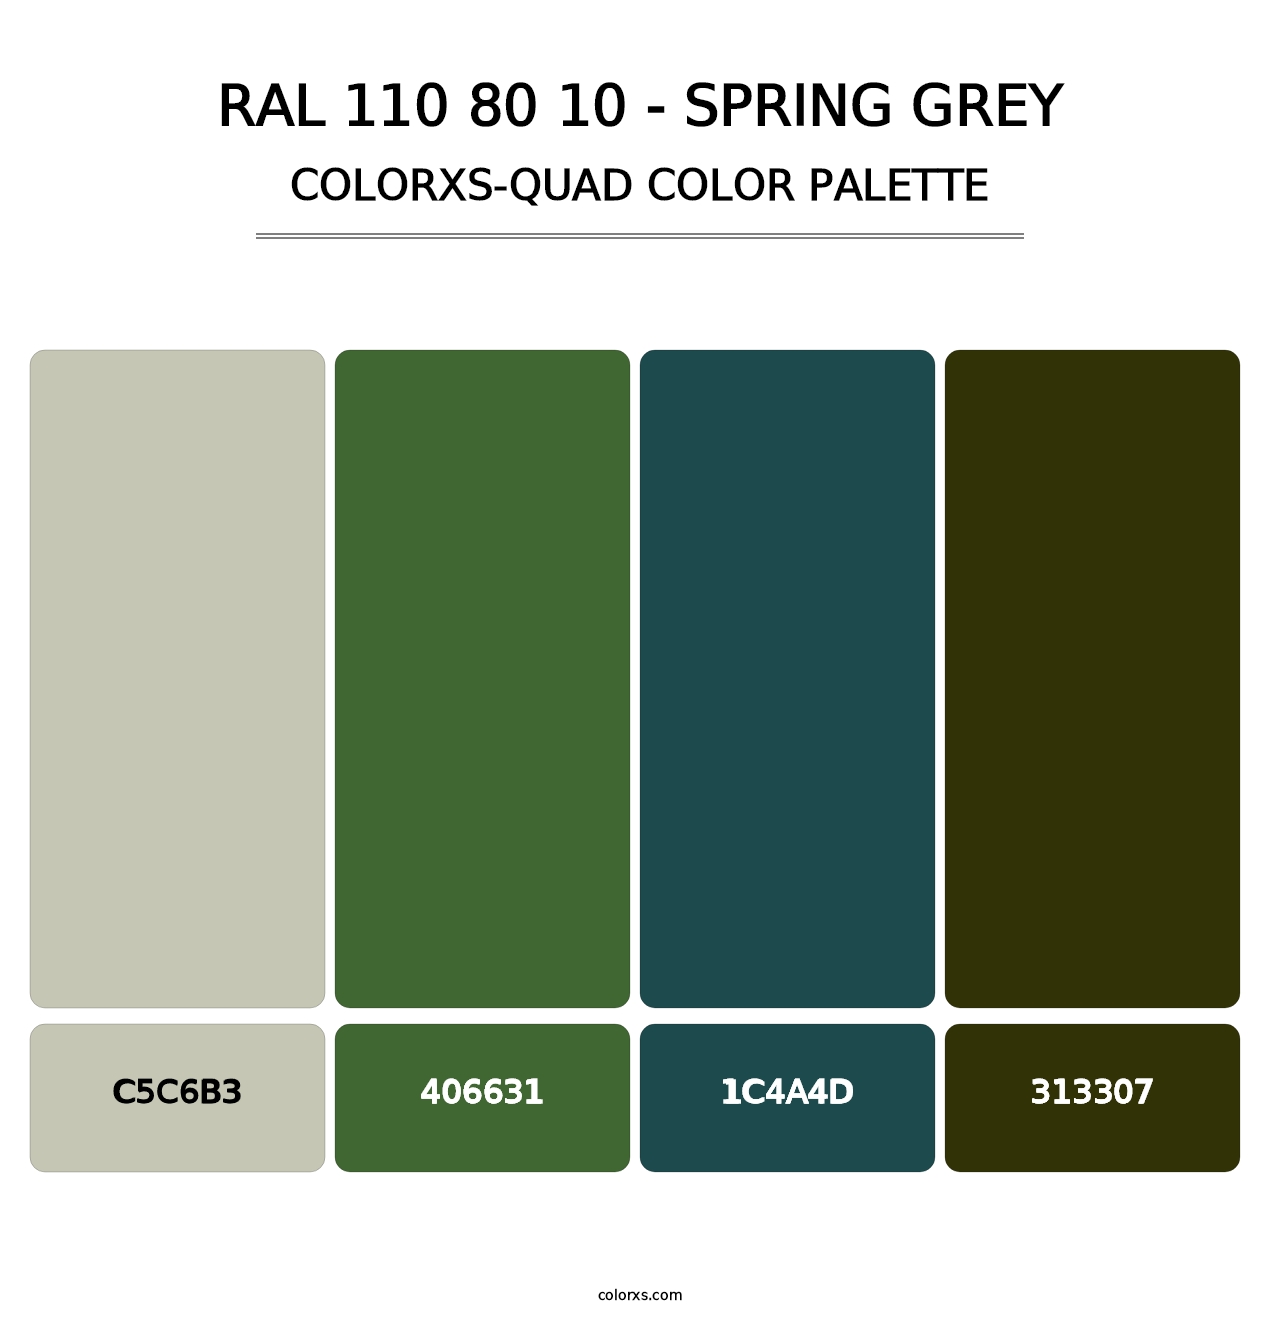 RAL 110 80 10 - Spring Grey - Colorxs Quad Palette